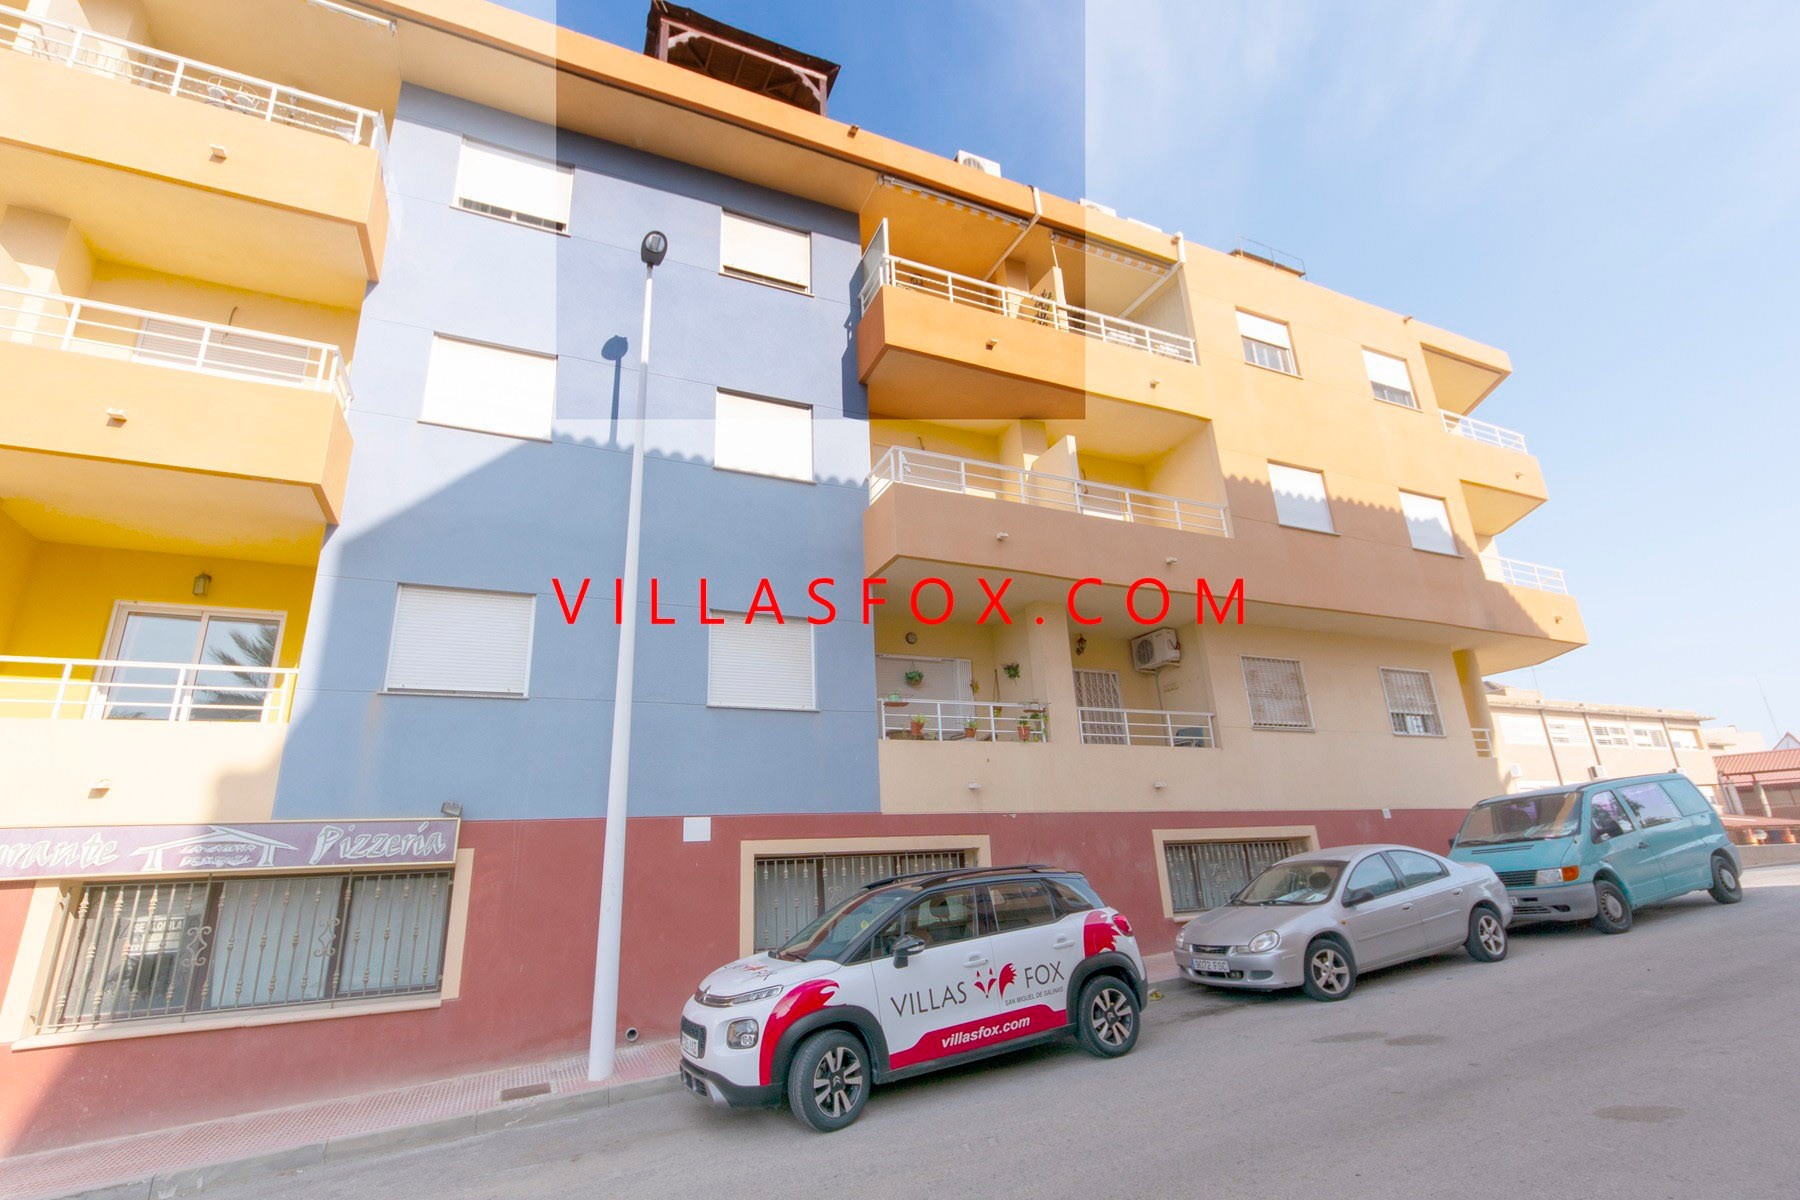 1 San Miguel de Salinas Leilighet i sentrum av Villas Fox beste eiendomsmeglere 611039449965e